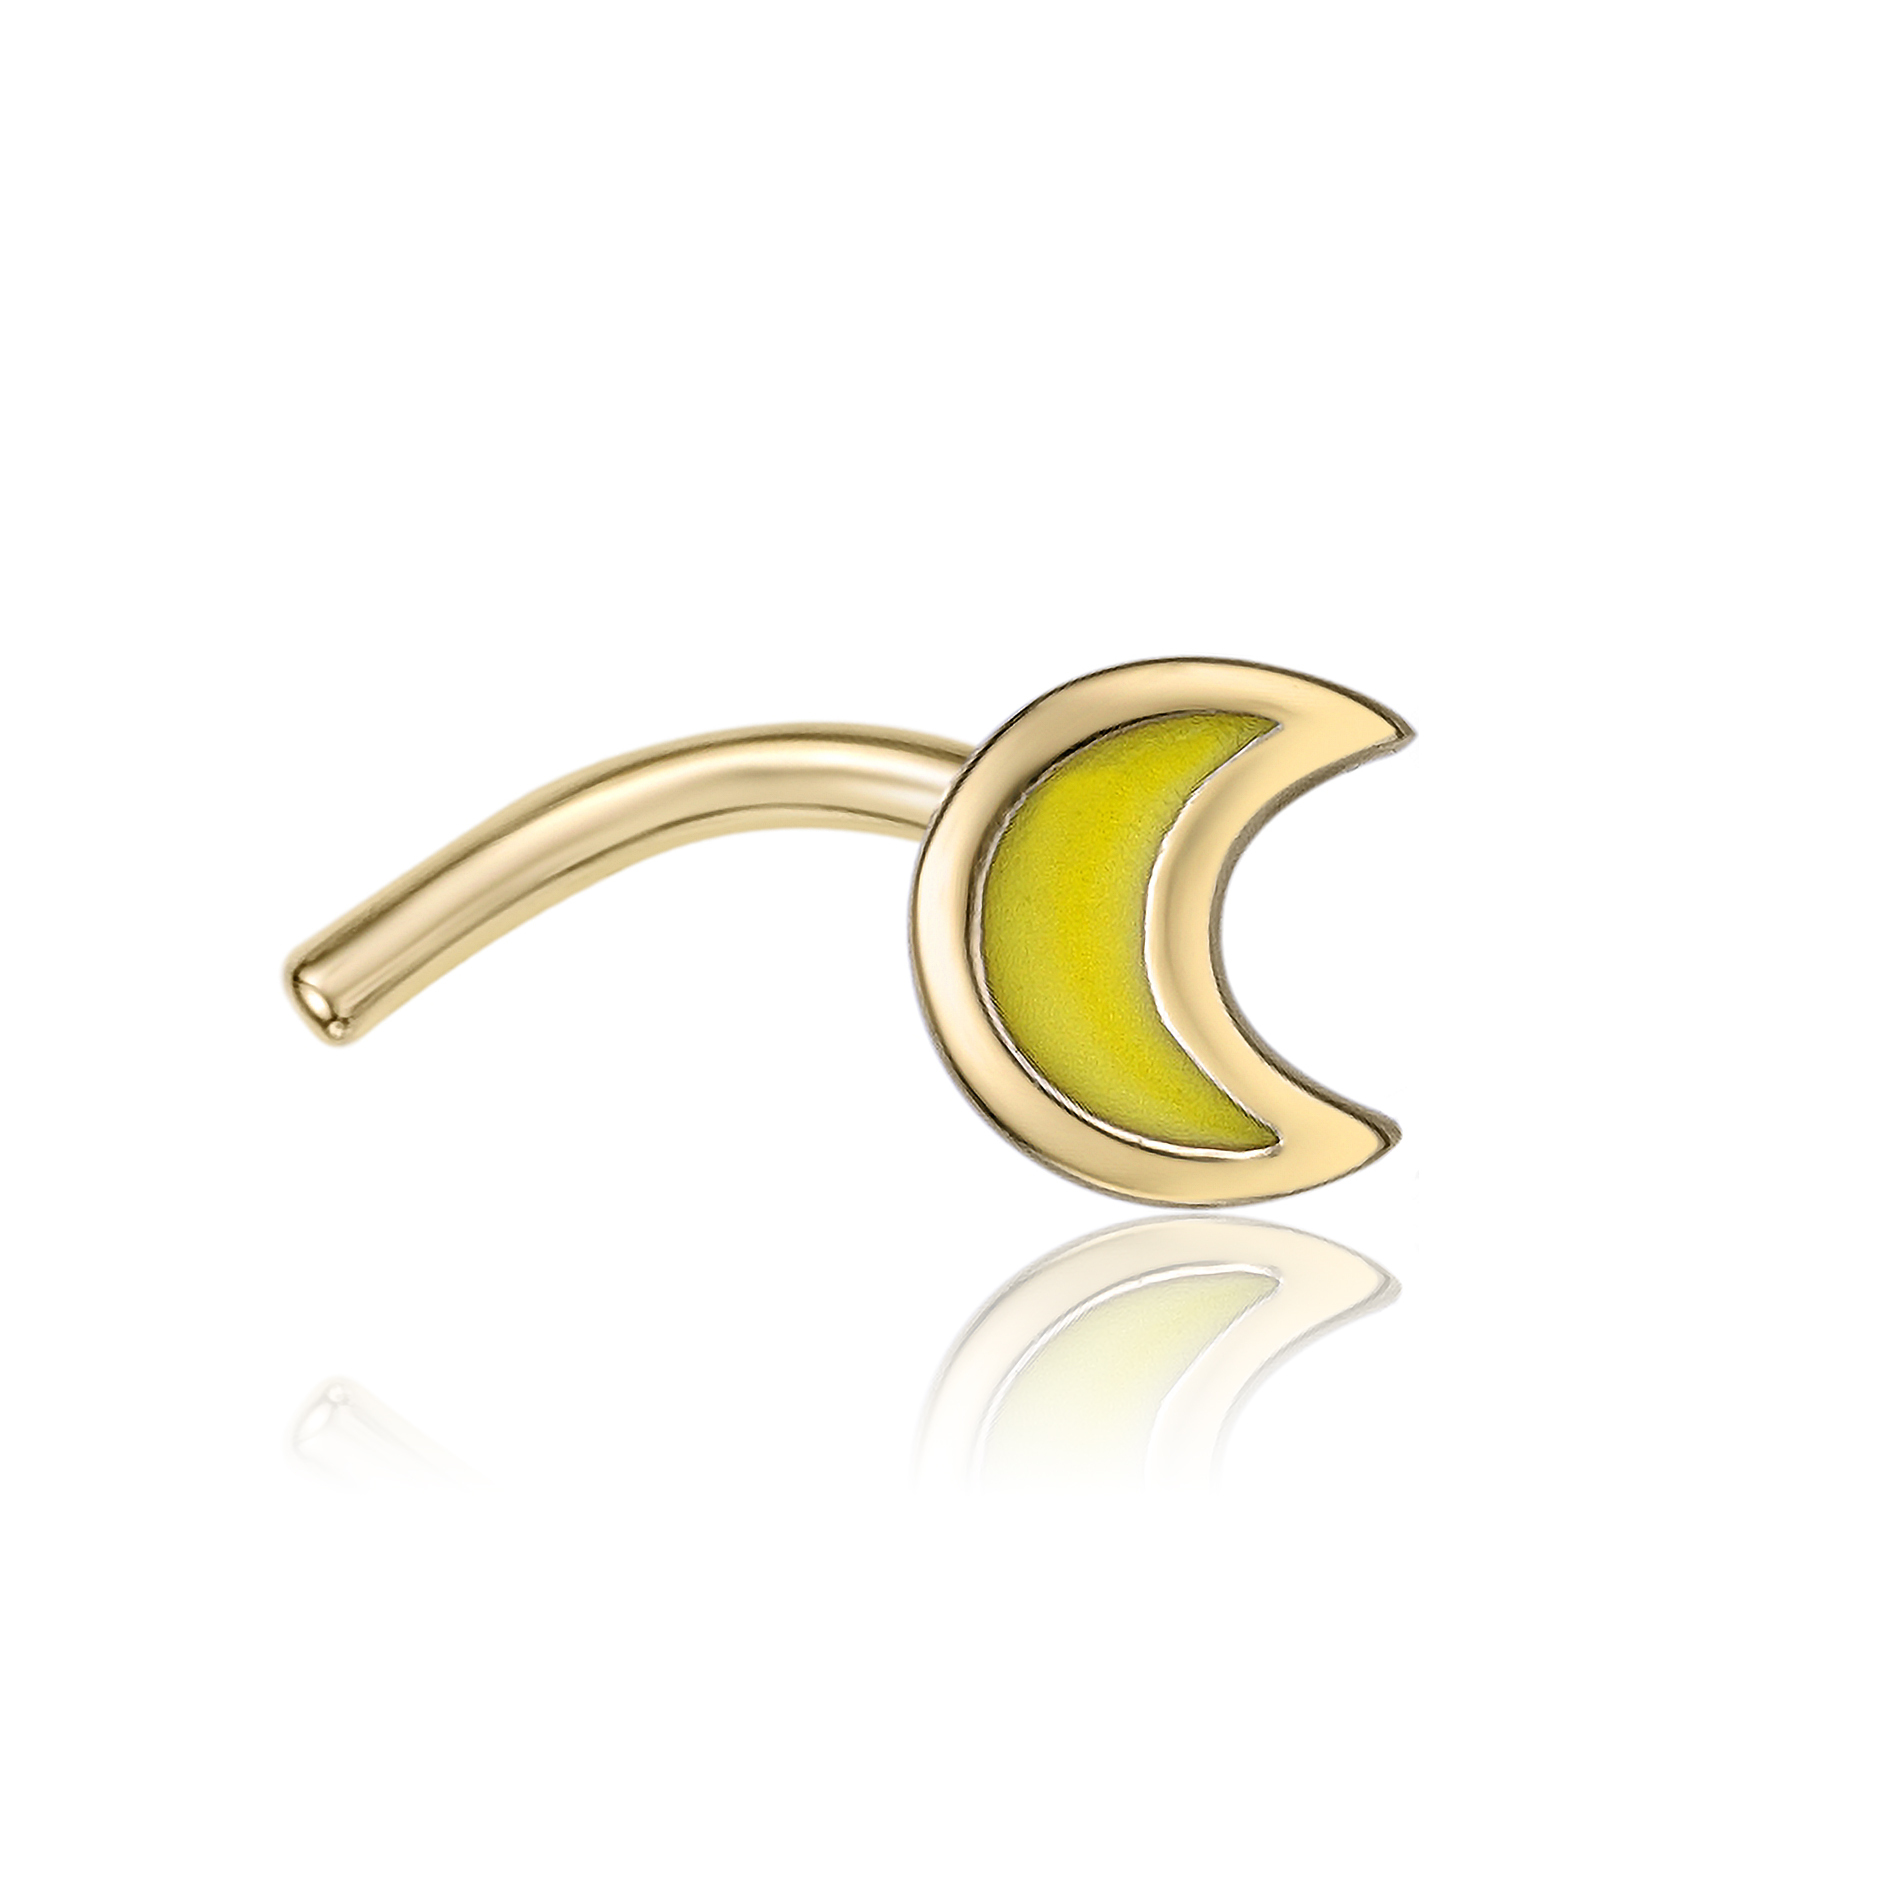 Lavari Jewelers Women's 4.1 MM Yellow Enamel Moon Curved Nose Ring, 14K Yellow Gold, 20 Gauge